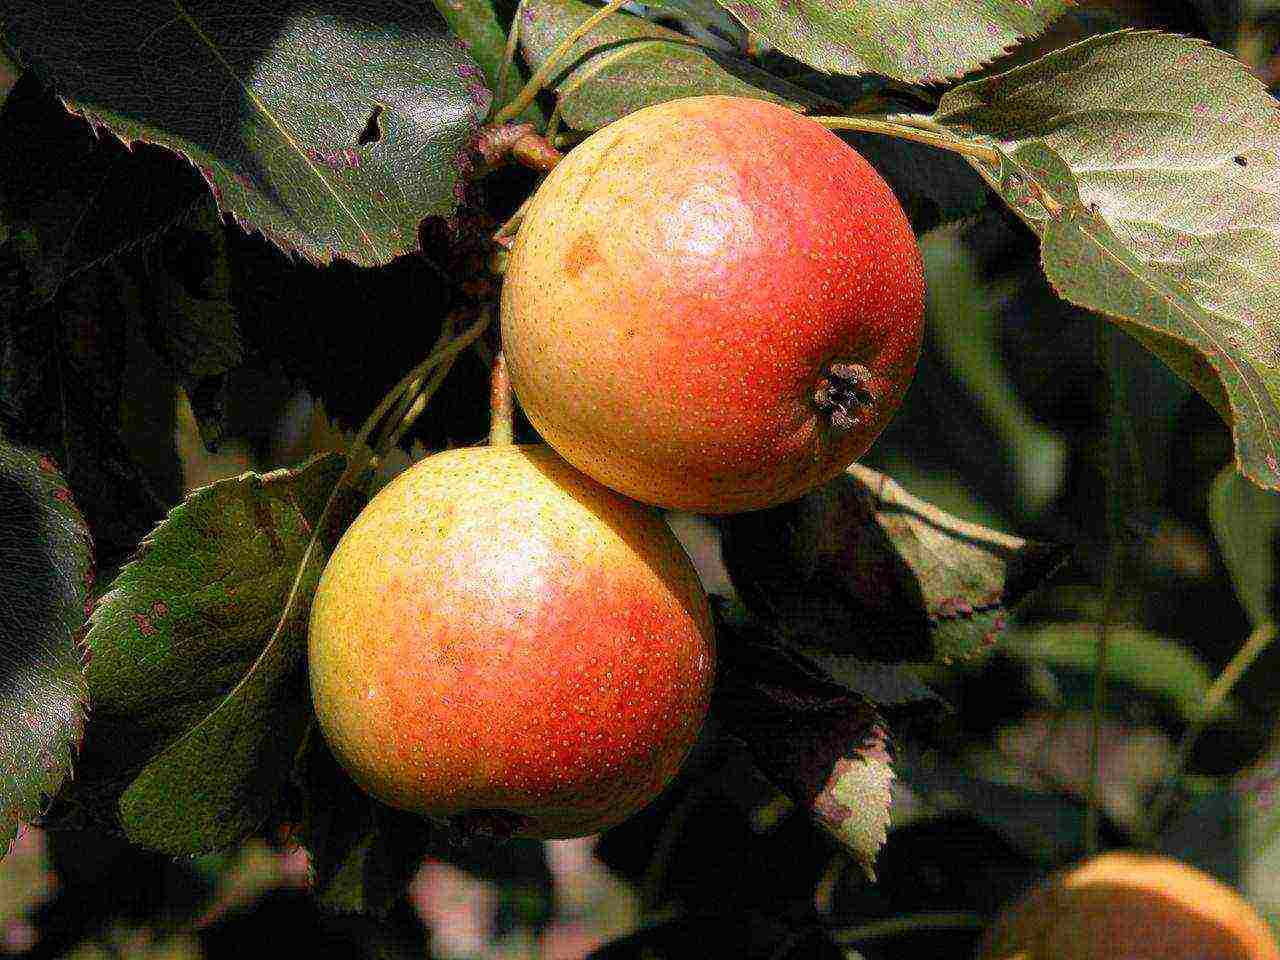 what varieties of pears are good